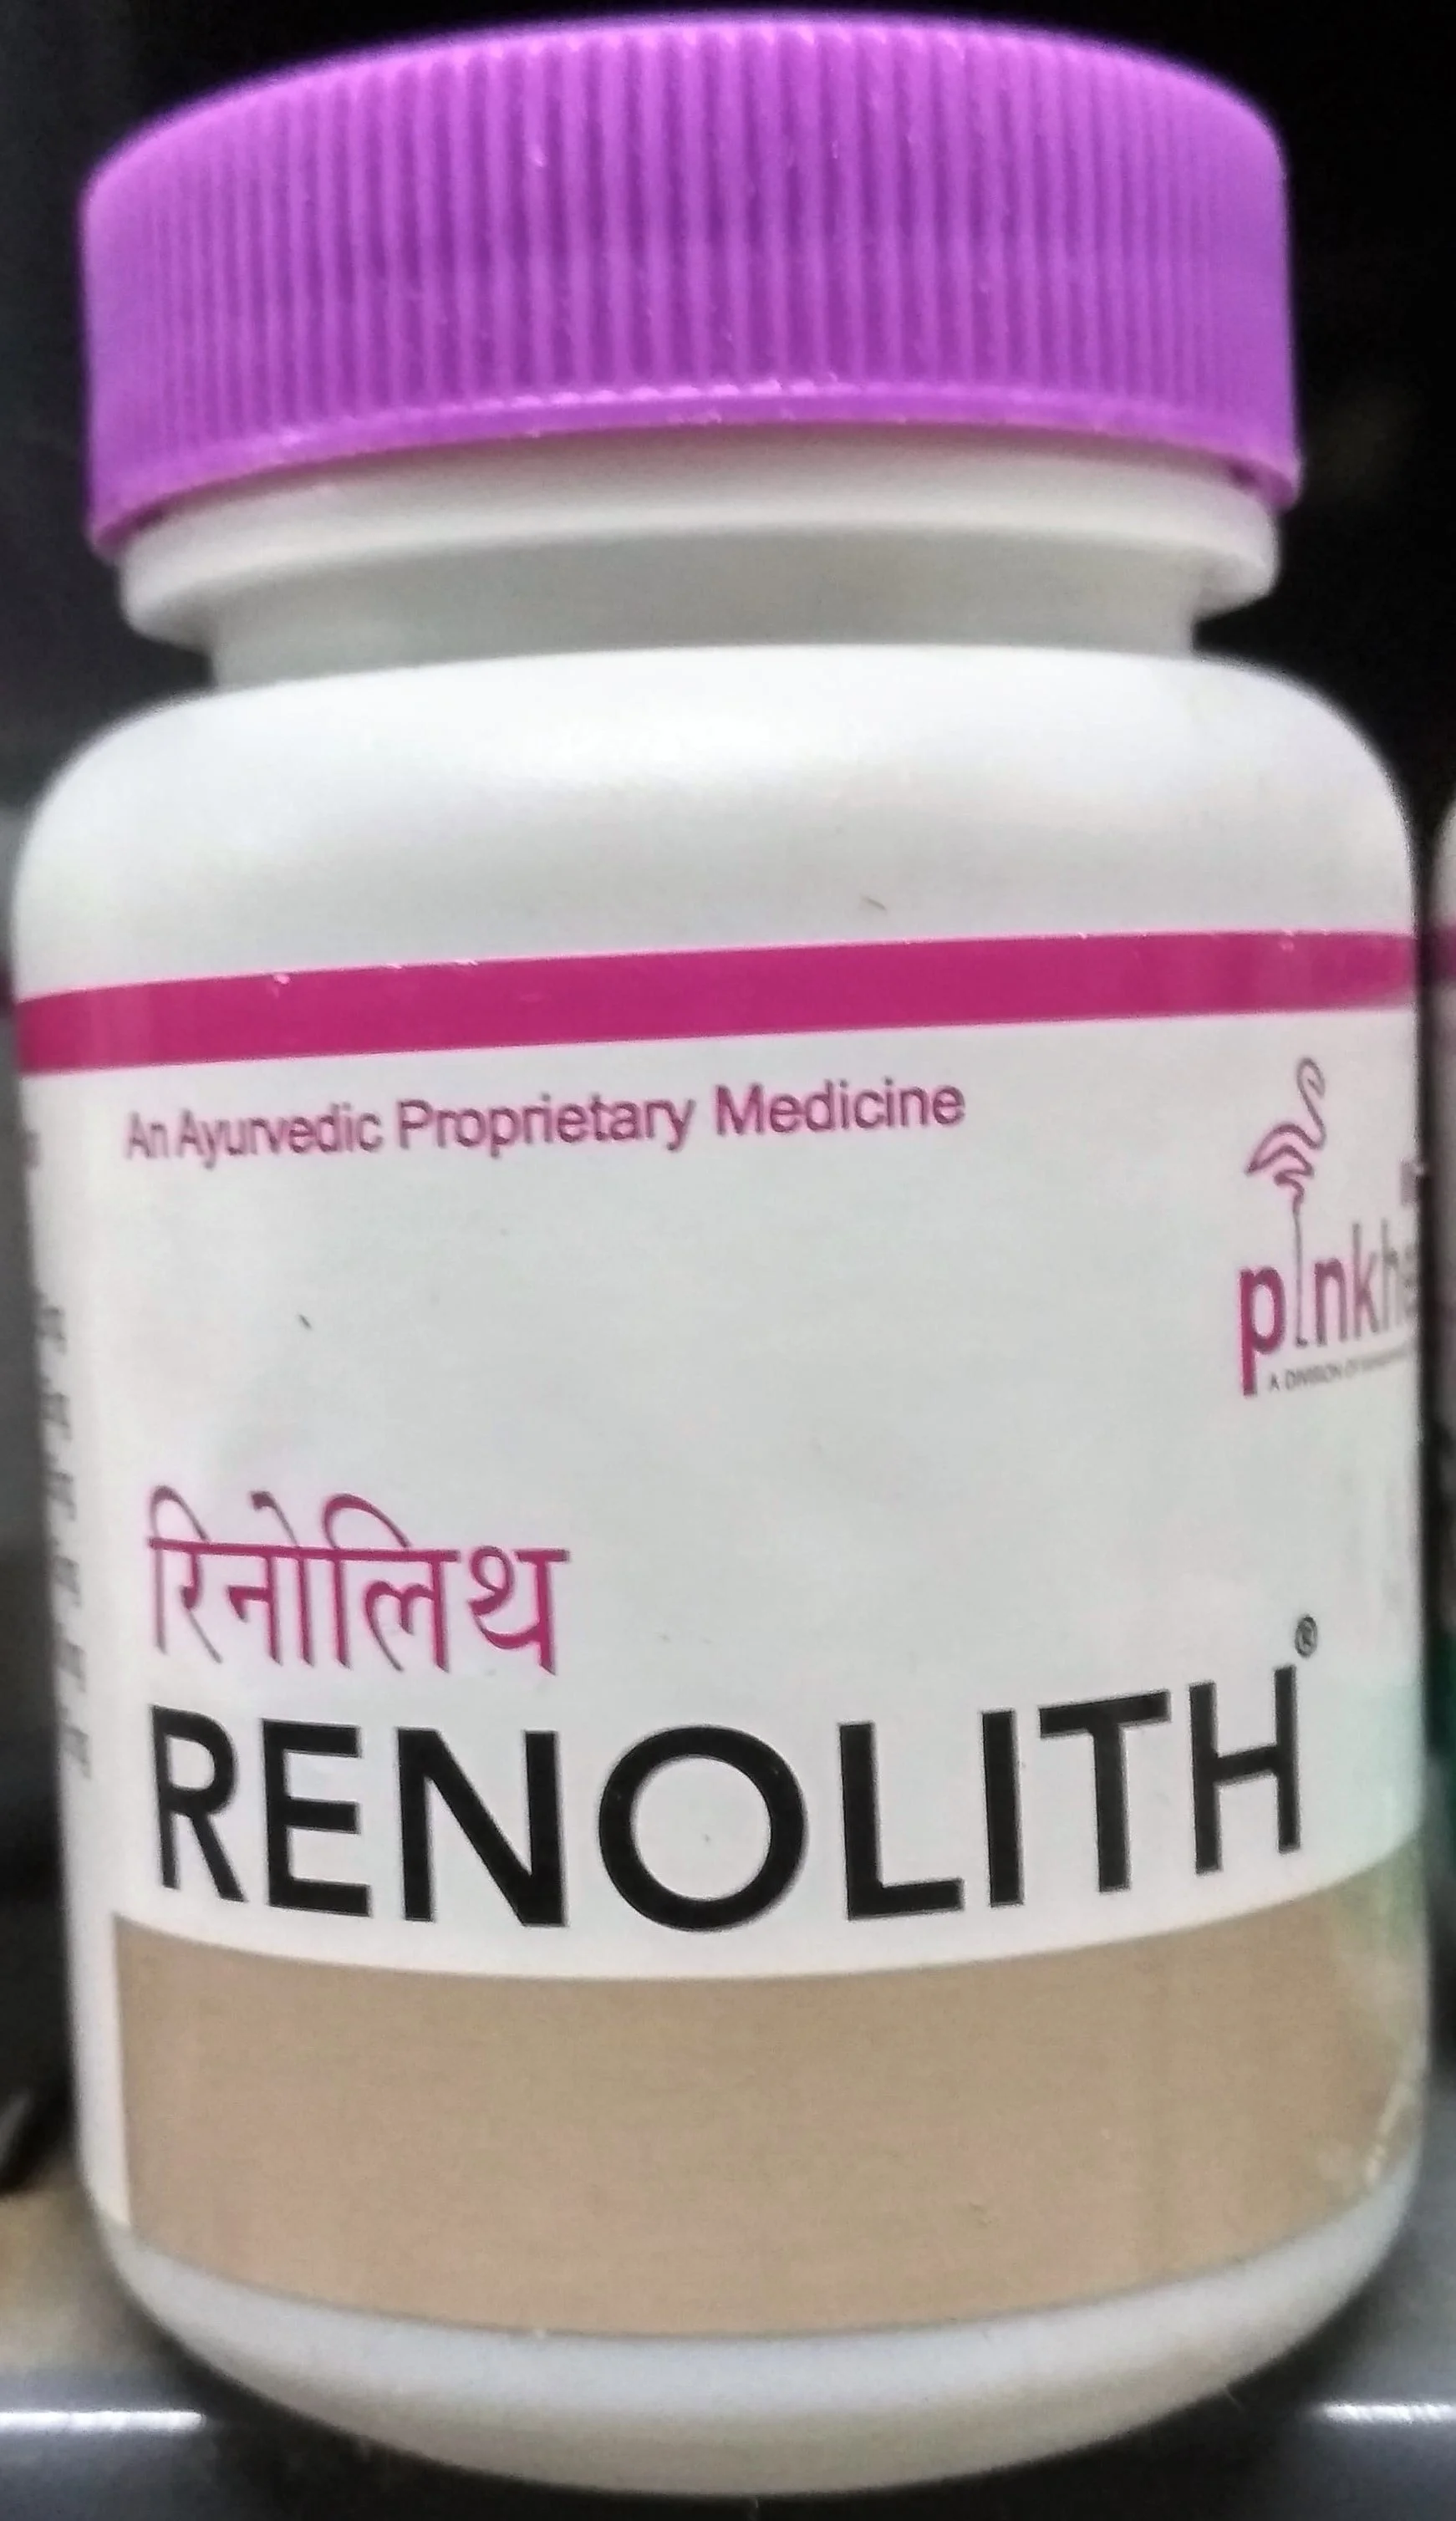 renolith 60 capsule upto 20% off pink health